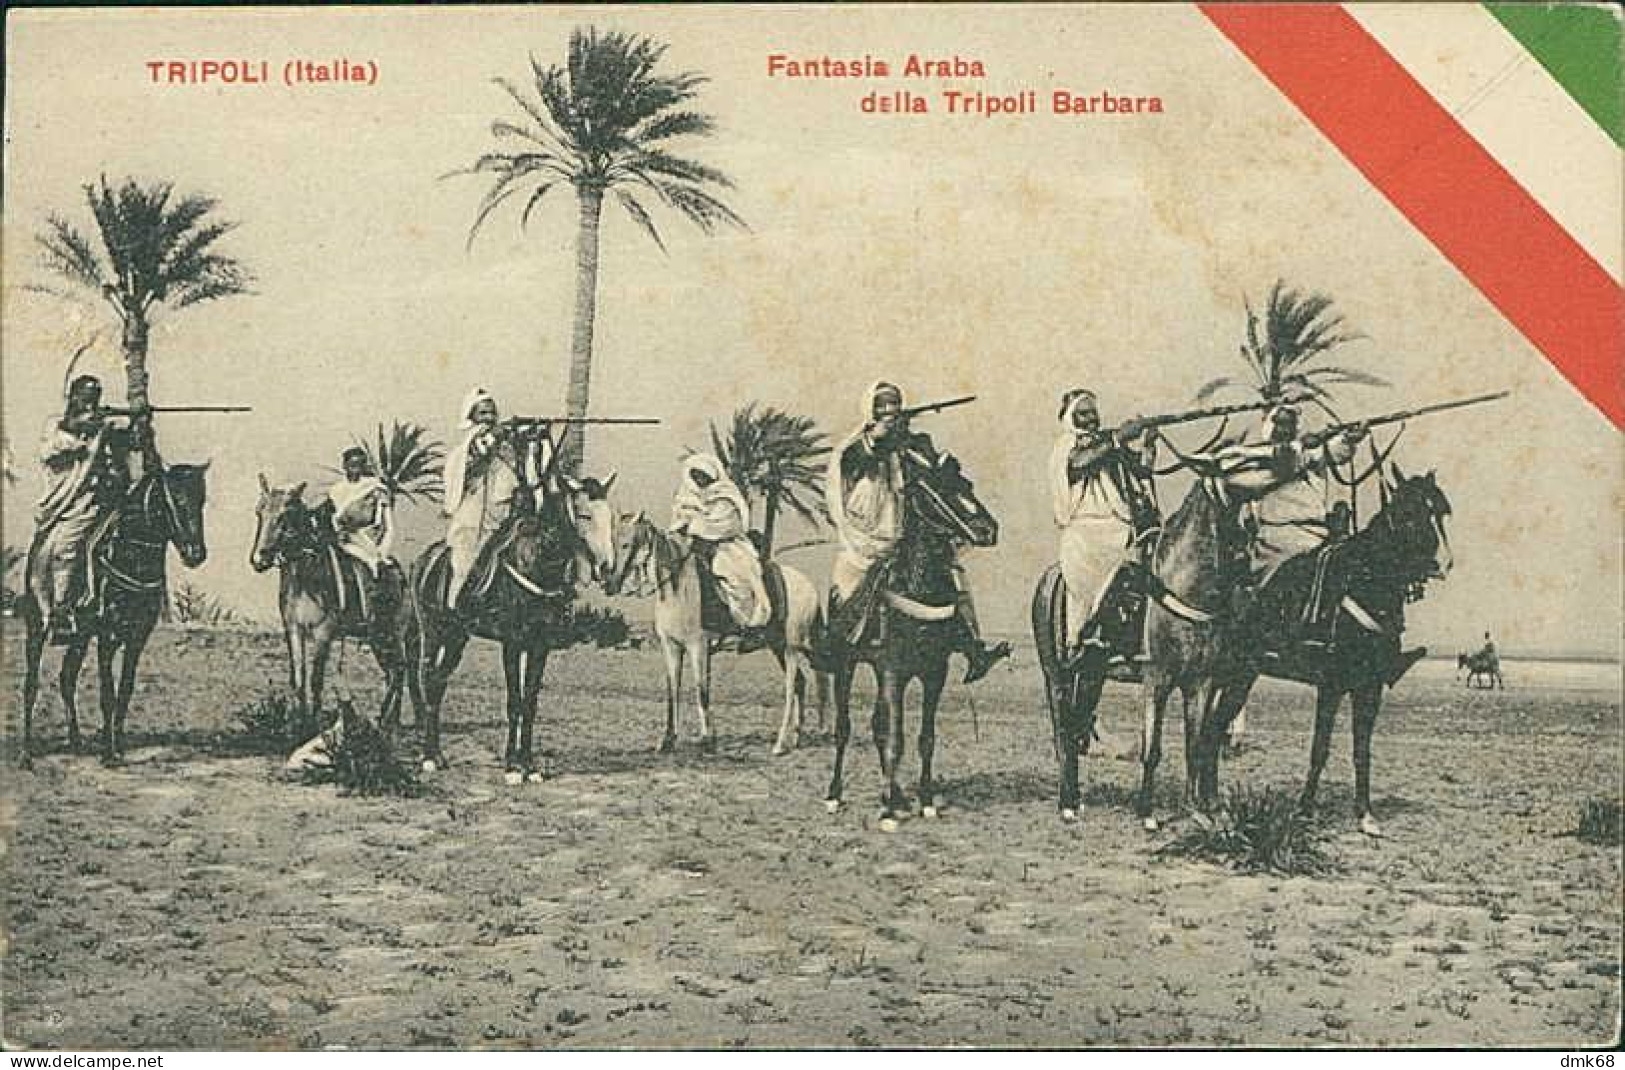 LIBIA / LIBYA - TRIPOLI BARBARA - FANTASIA ARABA - GUERRIERI / WARRIORS - PHOTO MICELI - 1910s (12462) - Libya